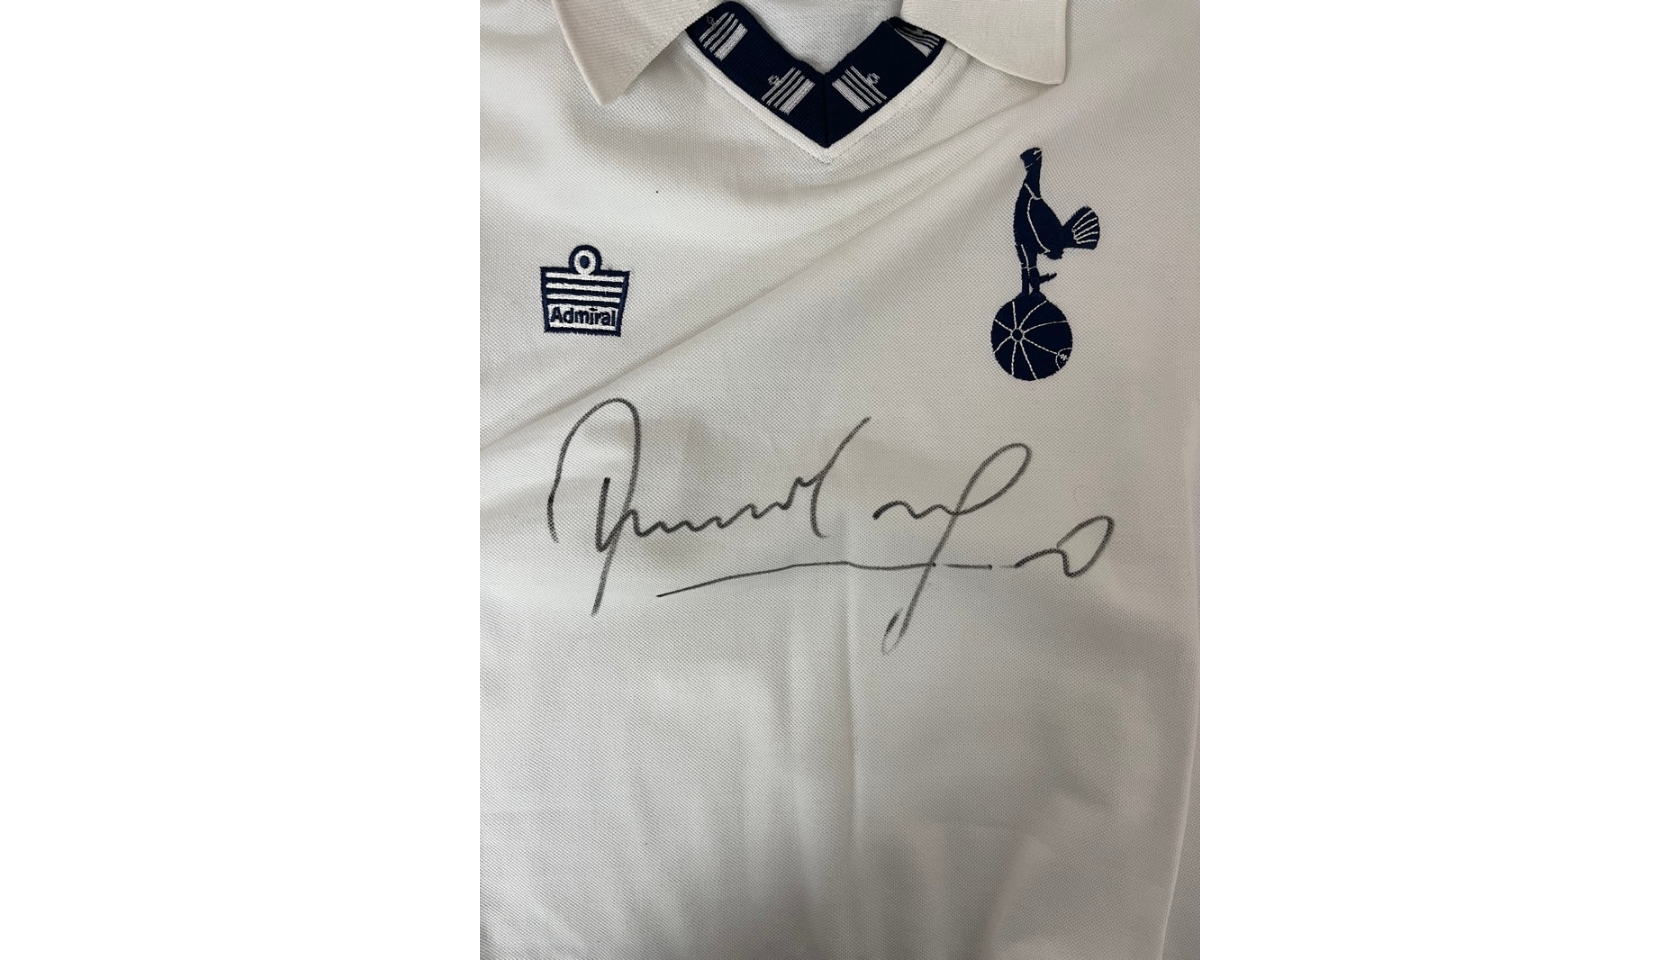 David Ginola Tottenham Shirt  Spurs Legend Football Shirts for Sale –